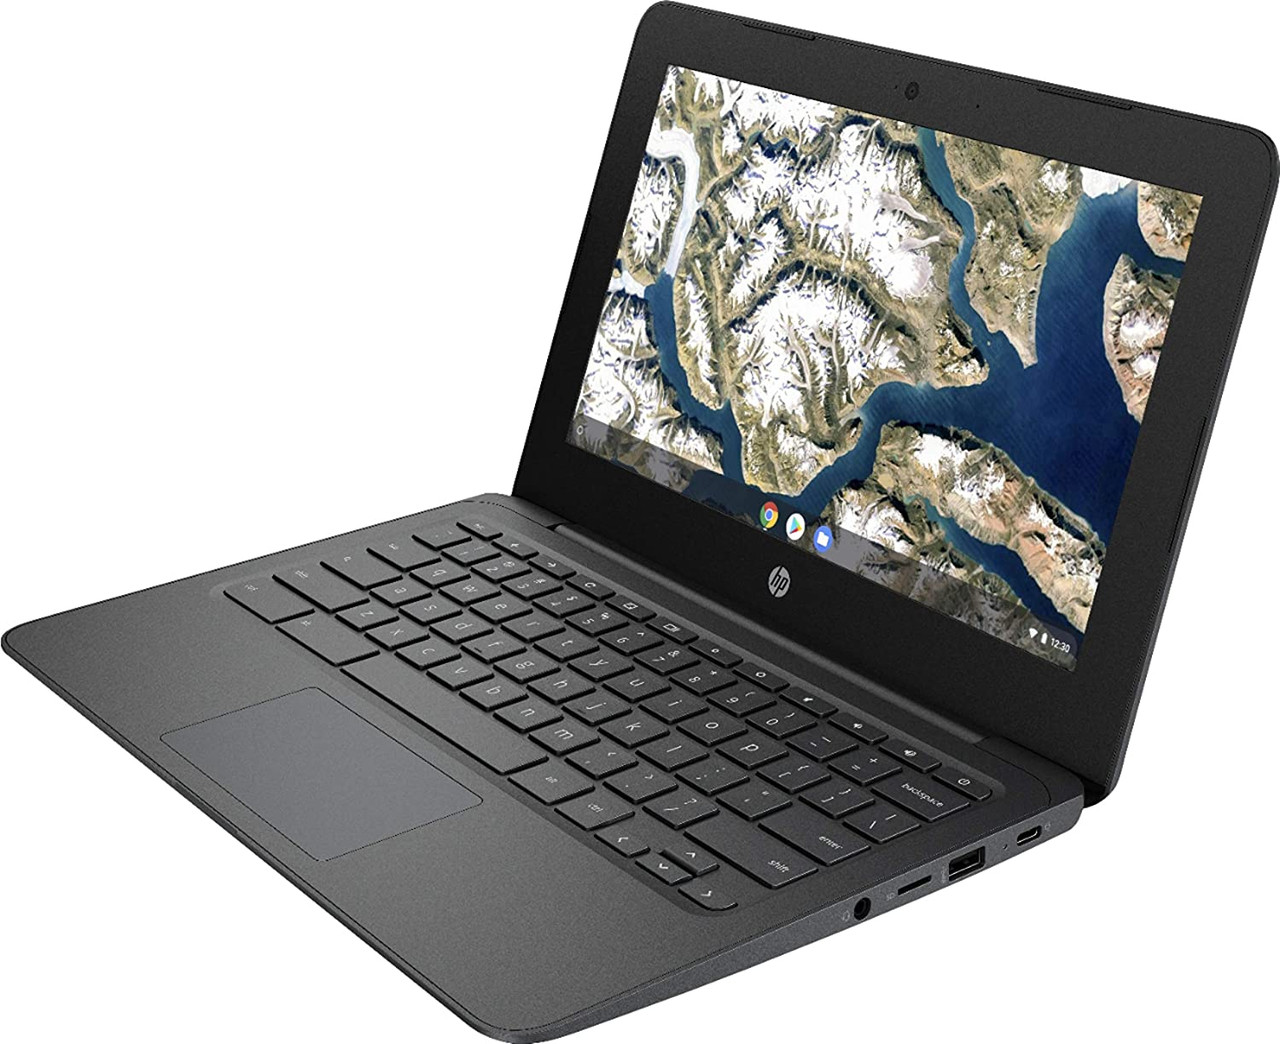 HP 11A-Nb0013Dx 11.6" Laptop Intel Celeron 1.60 GHz 4 GB 16 GB Chrome OS | Refurbished